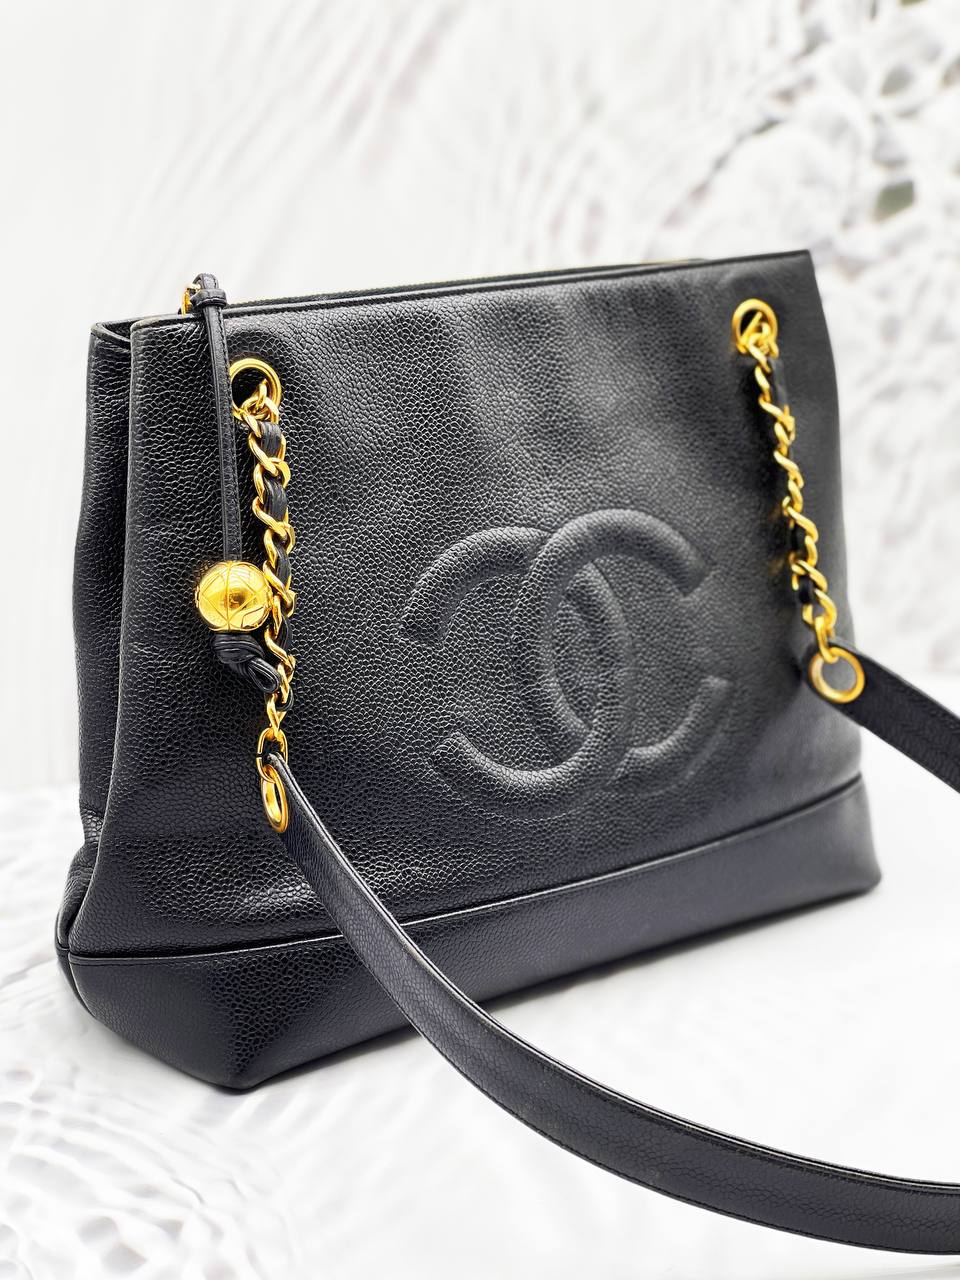 Chanel Vintage Cc Caviar Leather Shoulder Bag